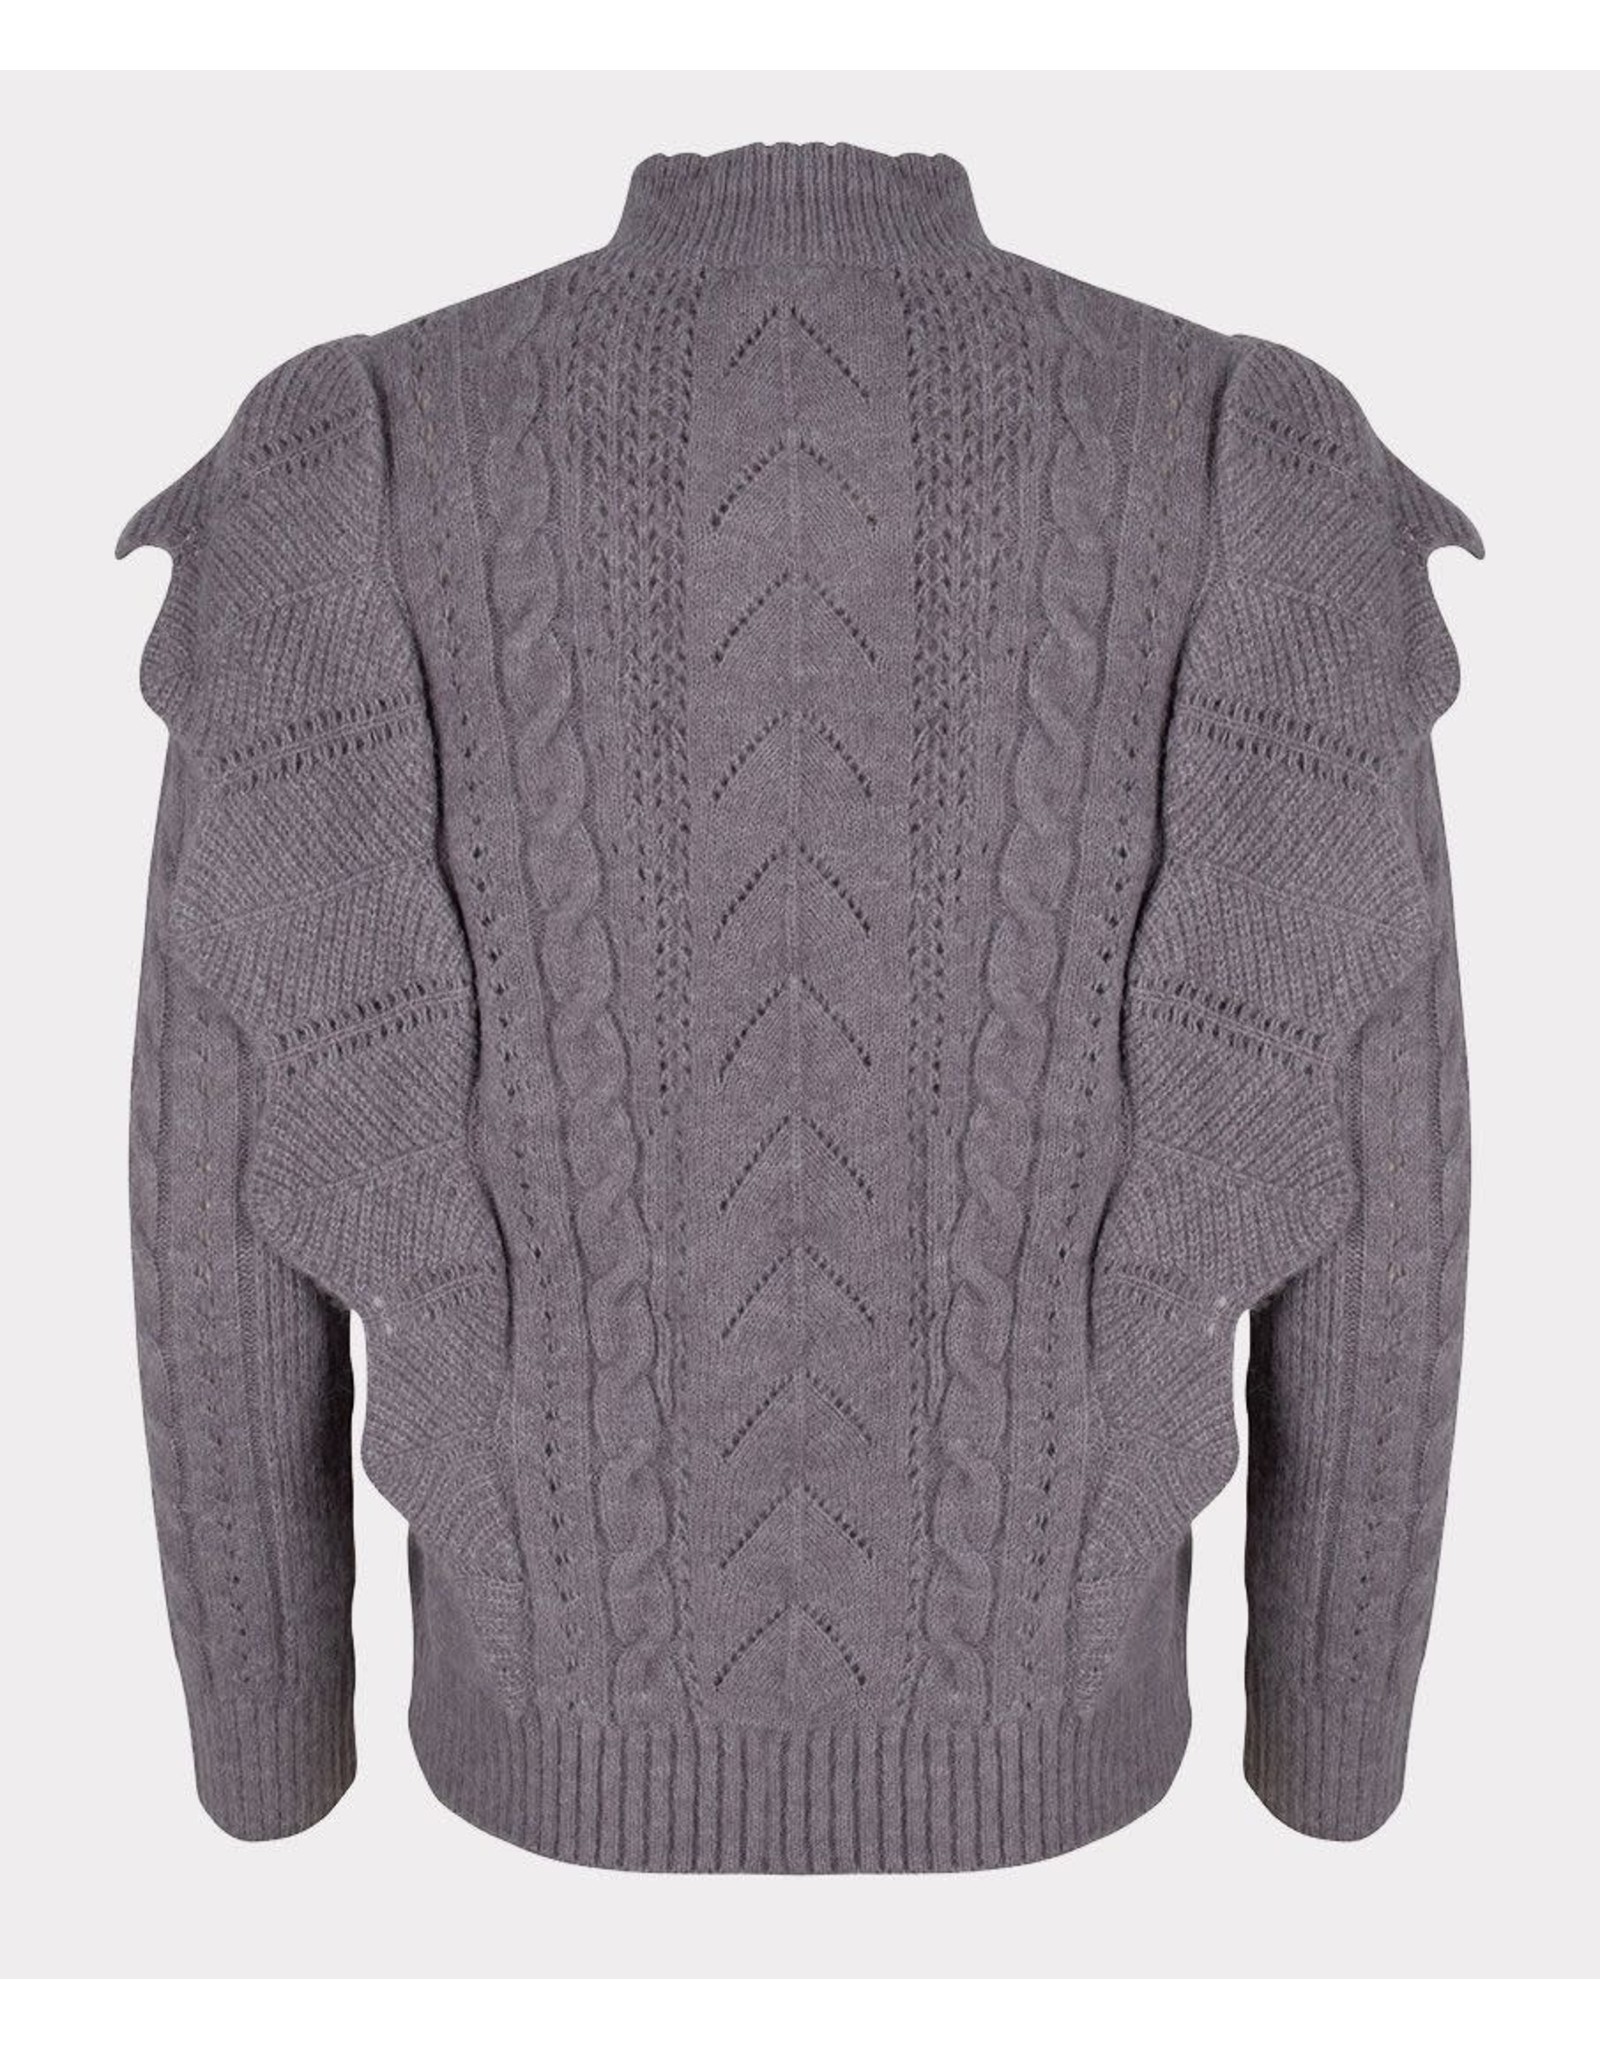 EsQualo EsQualo - Sweater with shoulder ruffles (grey)